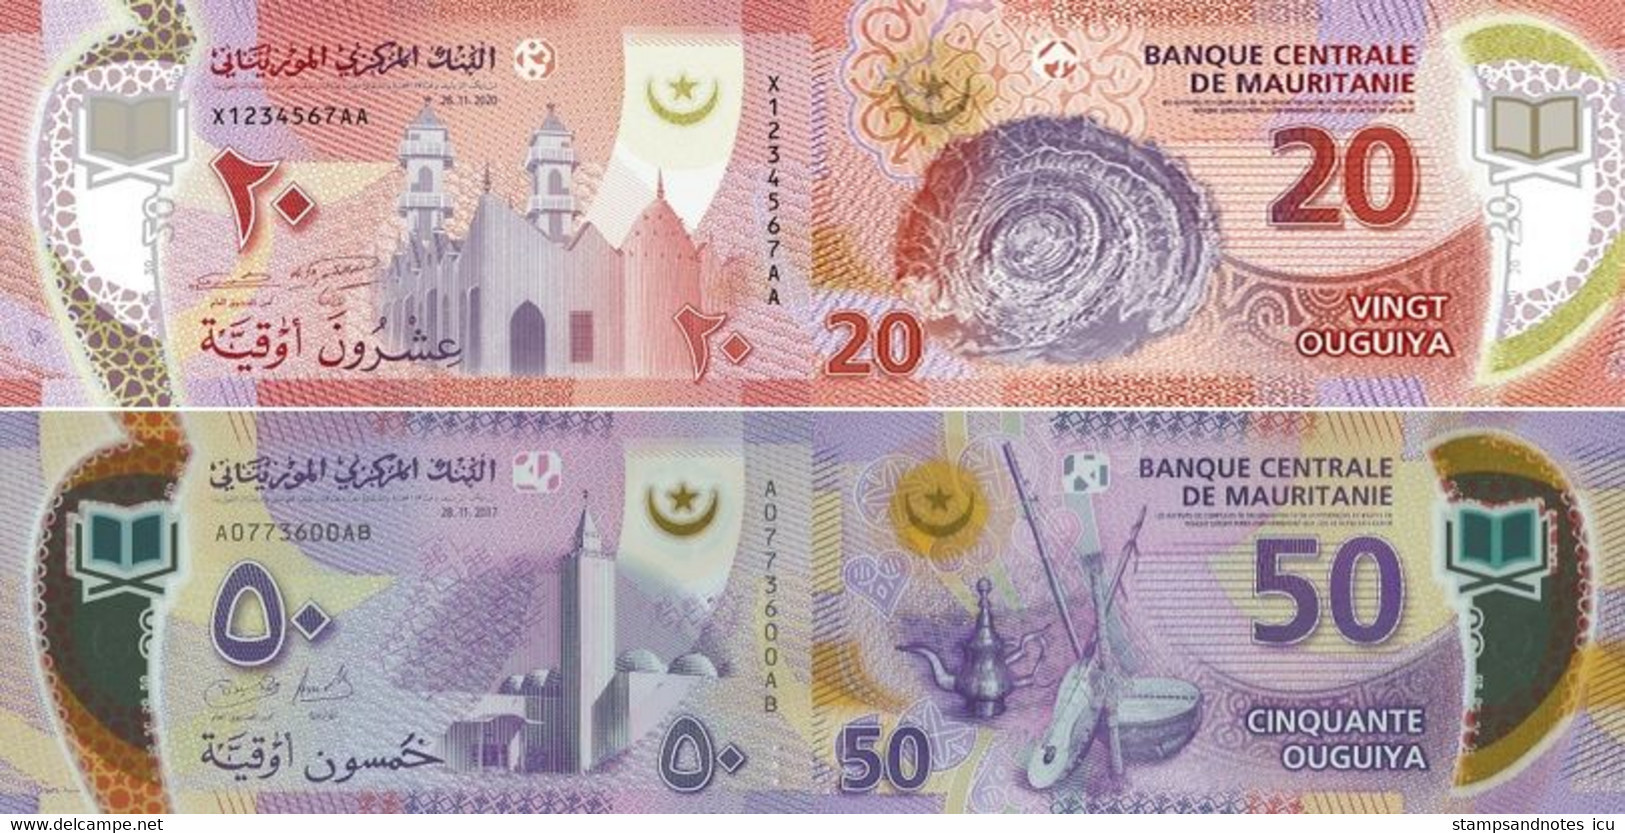 MAURITANIA   20 50 Ouguiya   2017 2020   P  WA22 22 UNC Polymer 2 Banknotes - Mauritania